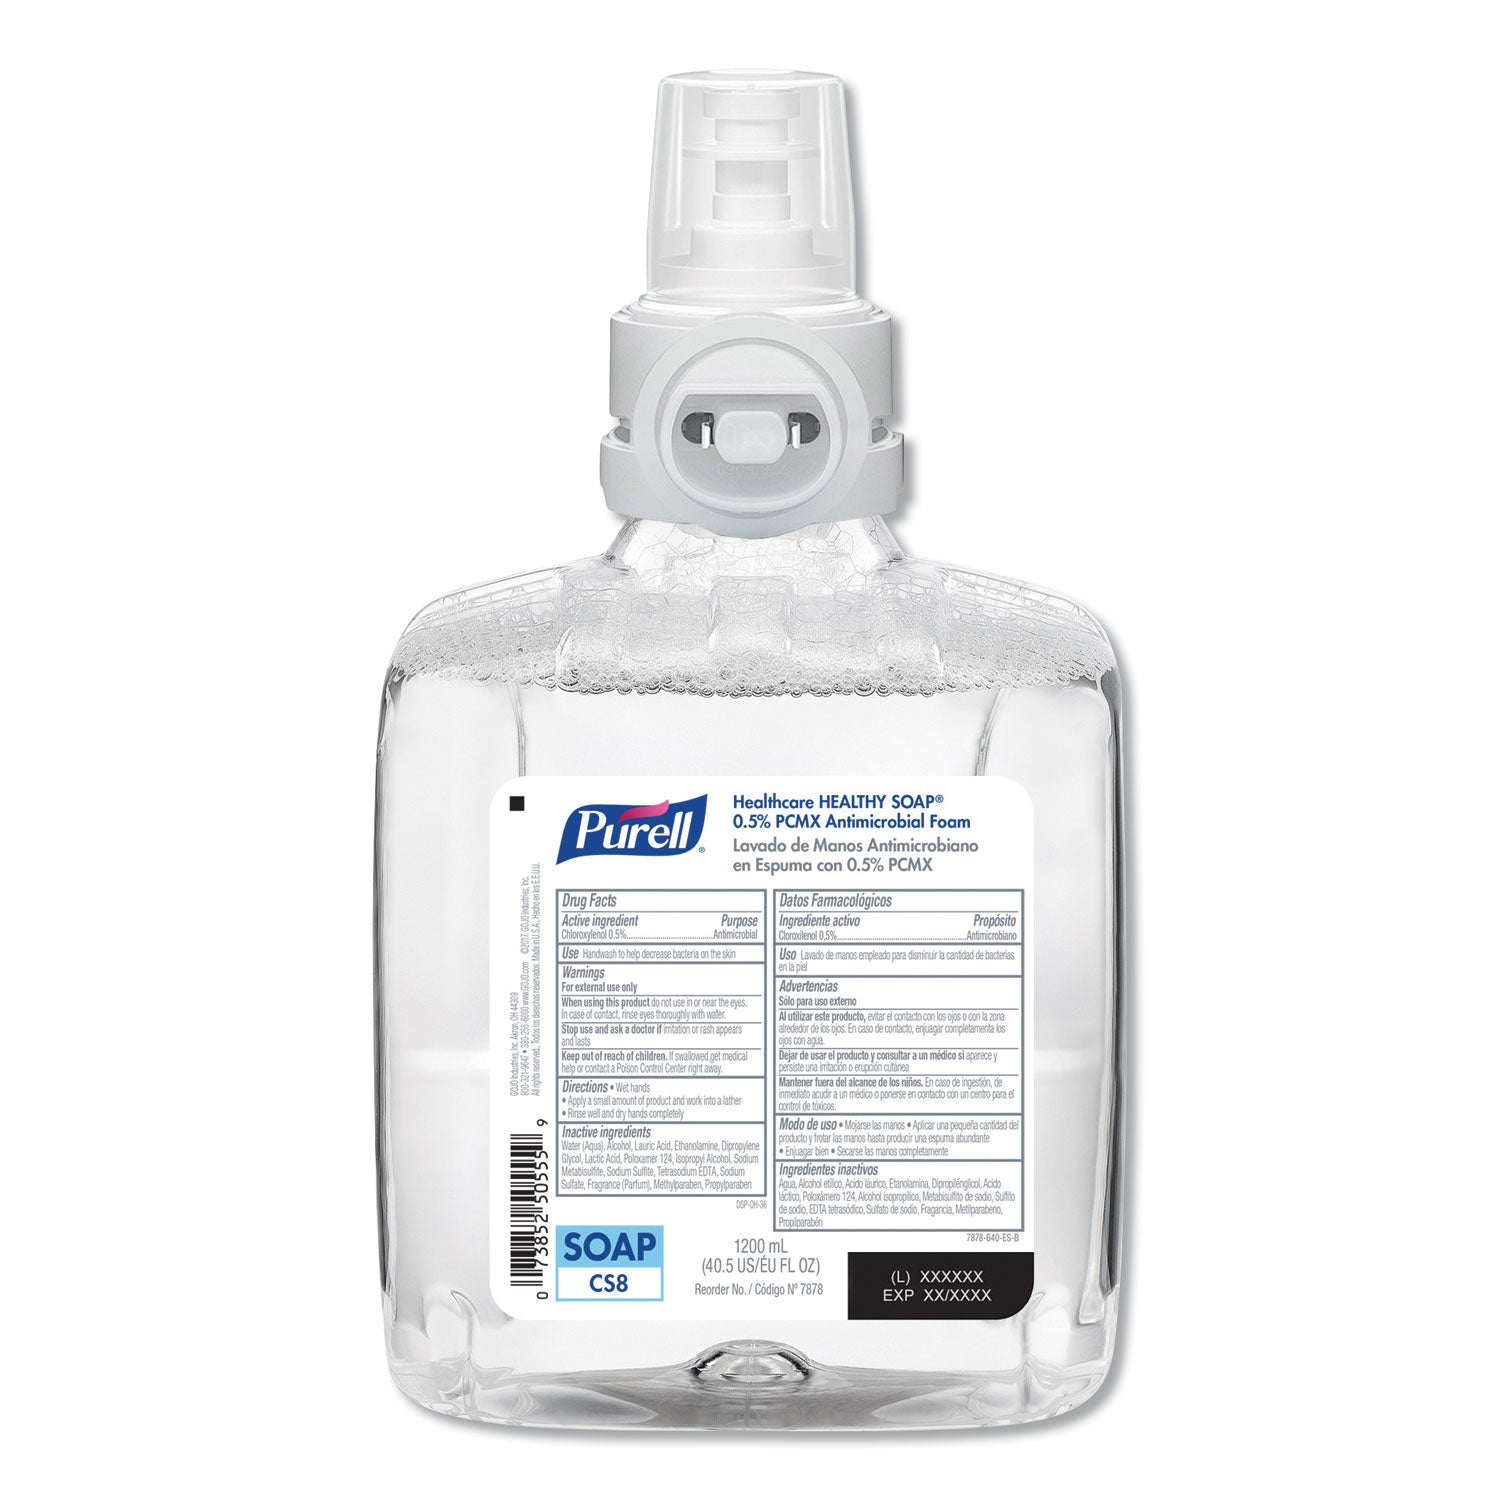 healthcare-healthy-soap-05%-pcmx-antimicrobial-foam-for-cs8-dispensers-light-floral-scent-1200-ml-2-carton_goj787802ct - 2